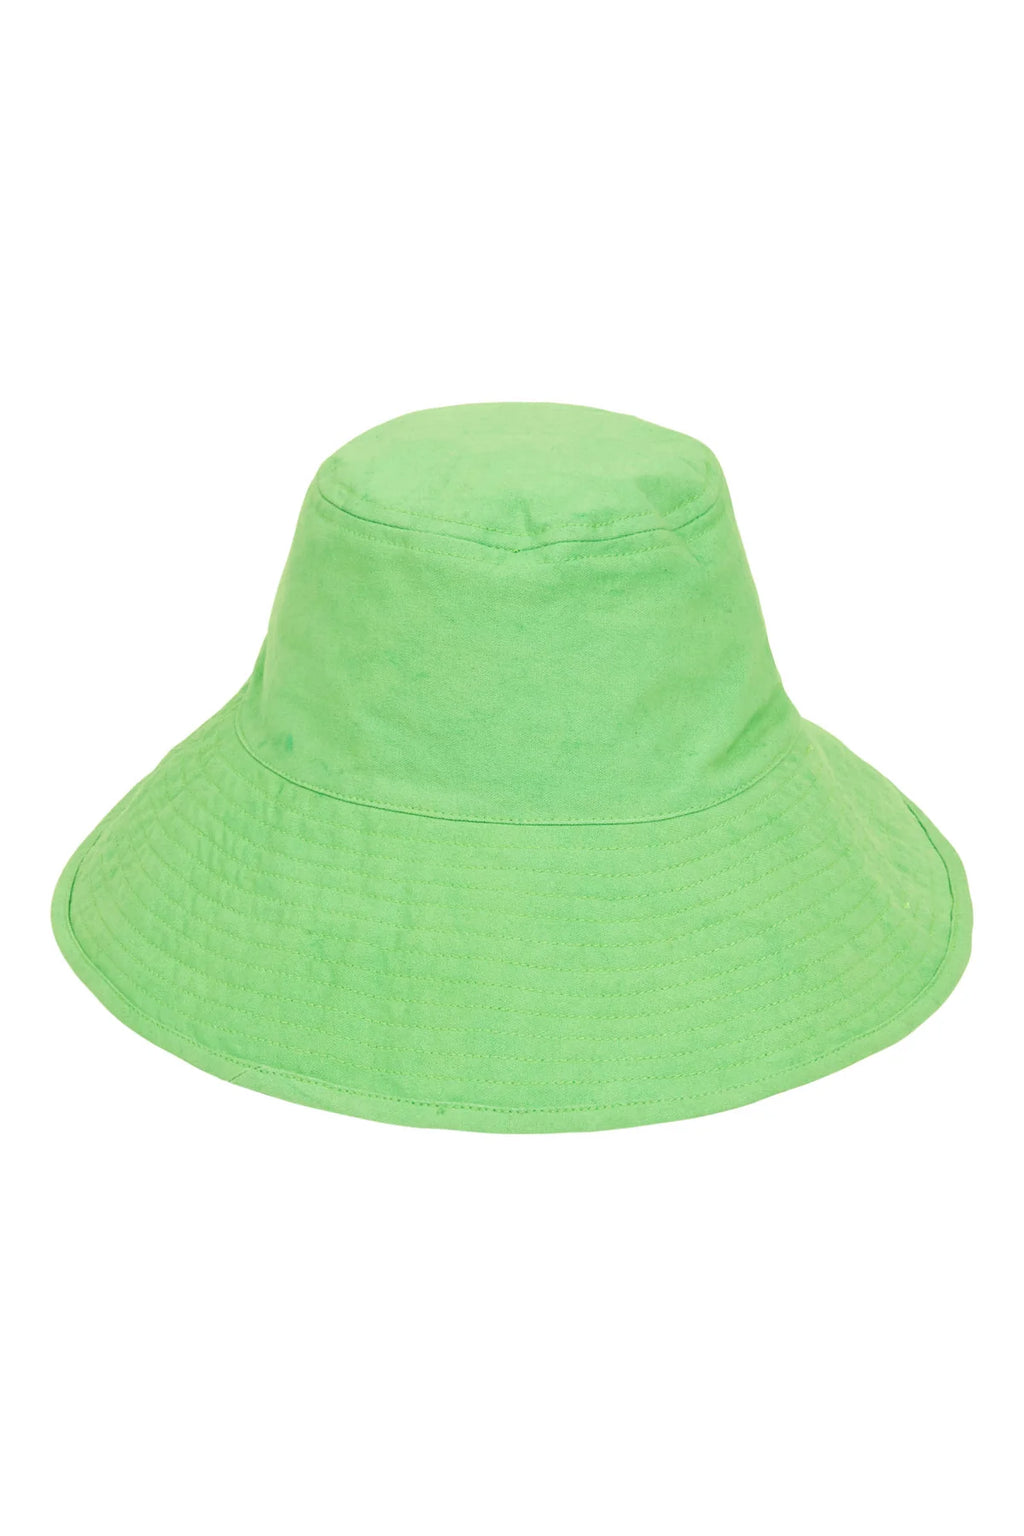 La Vie Hat